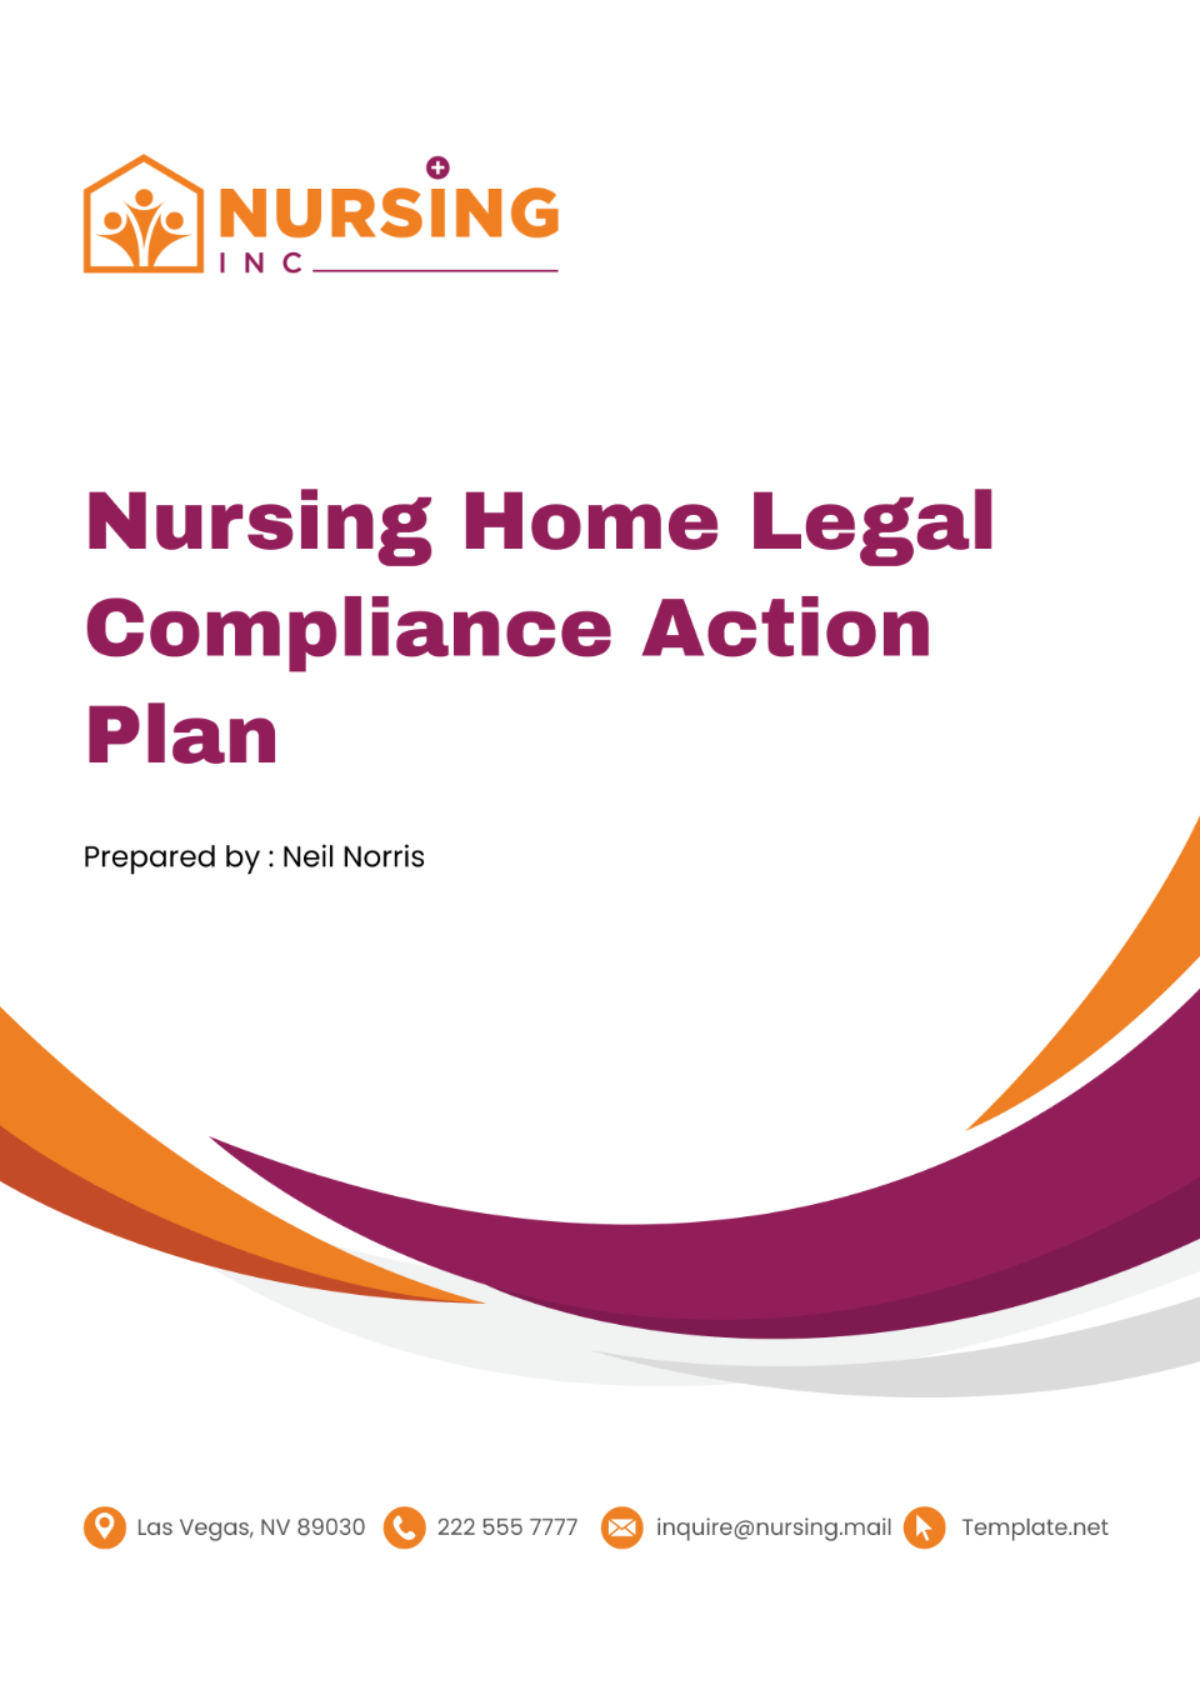 Nursing Home Legal Compliance Action Plan Template